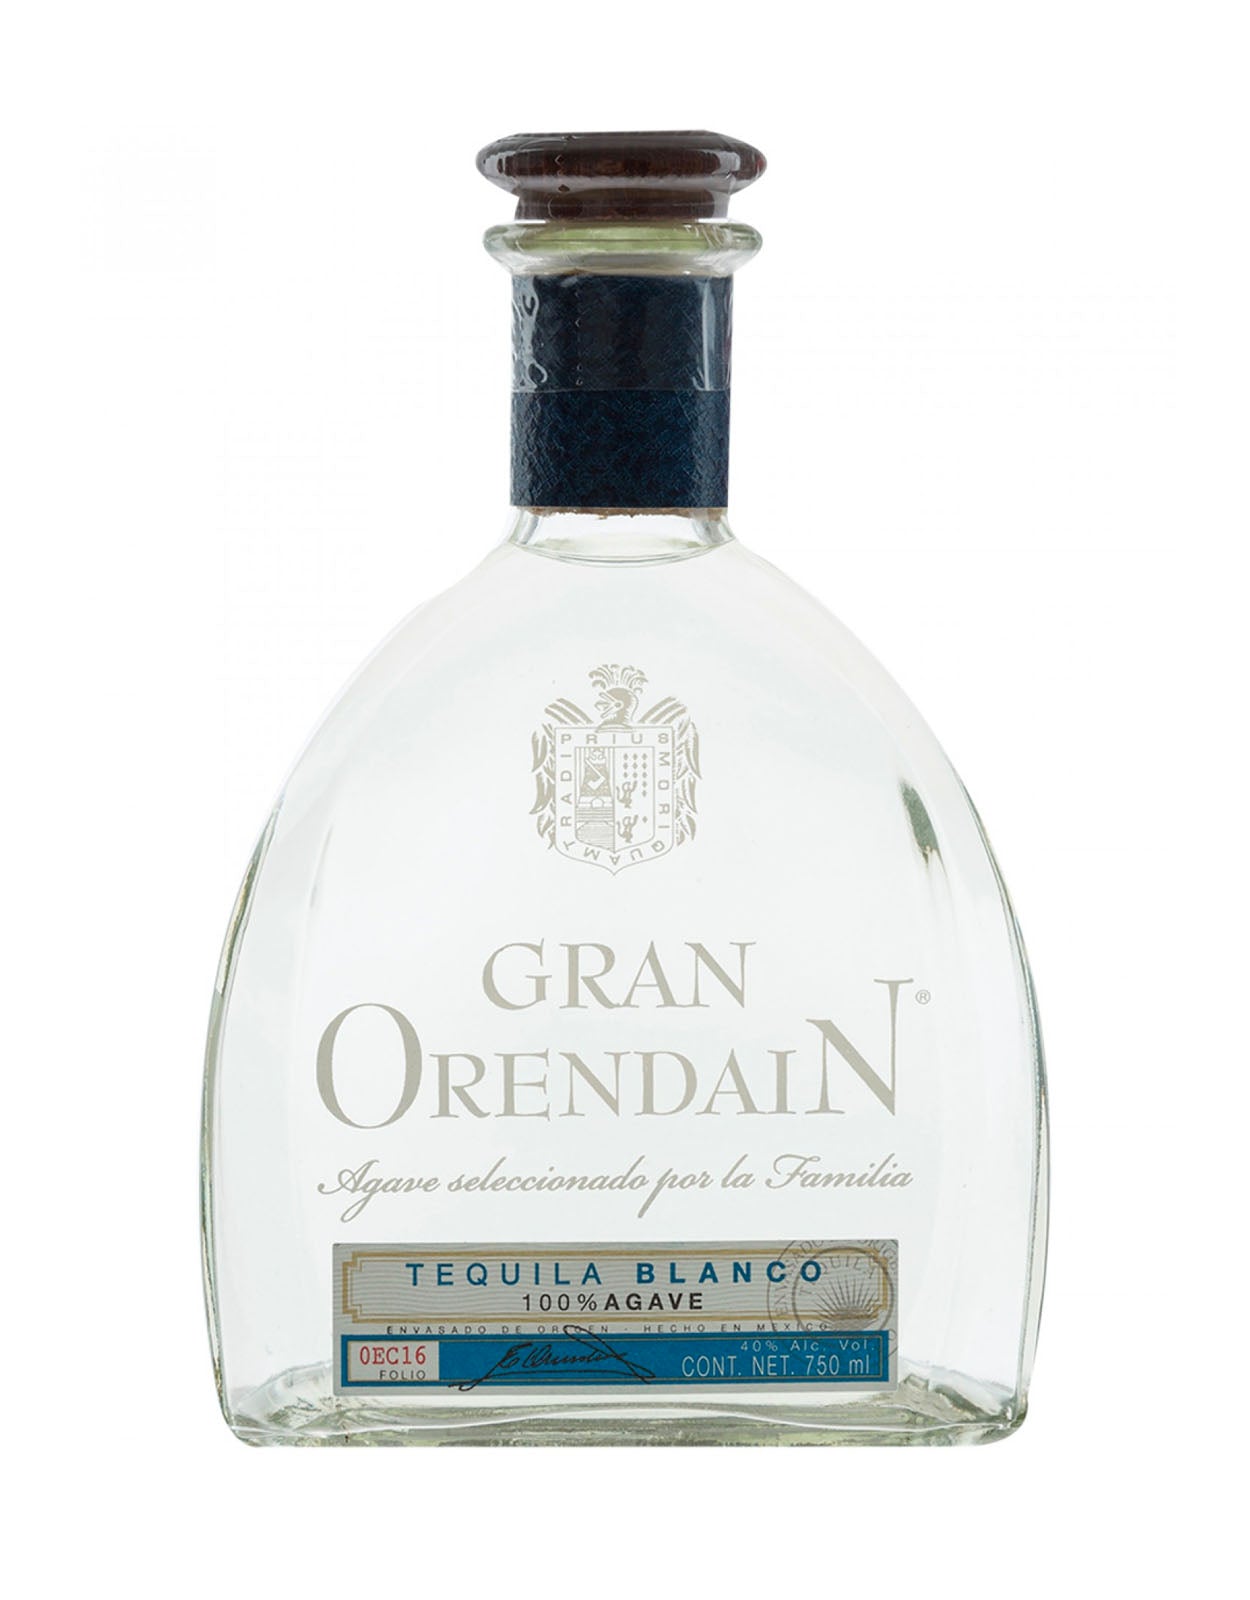 Gran Orendain Blanco Tequila